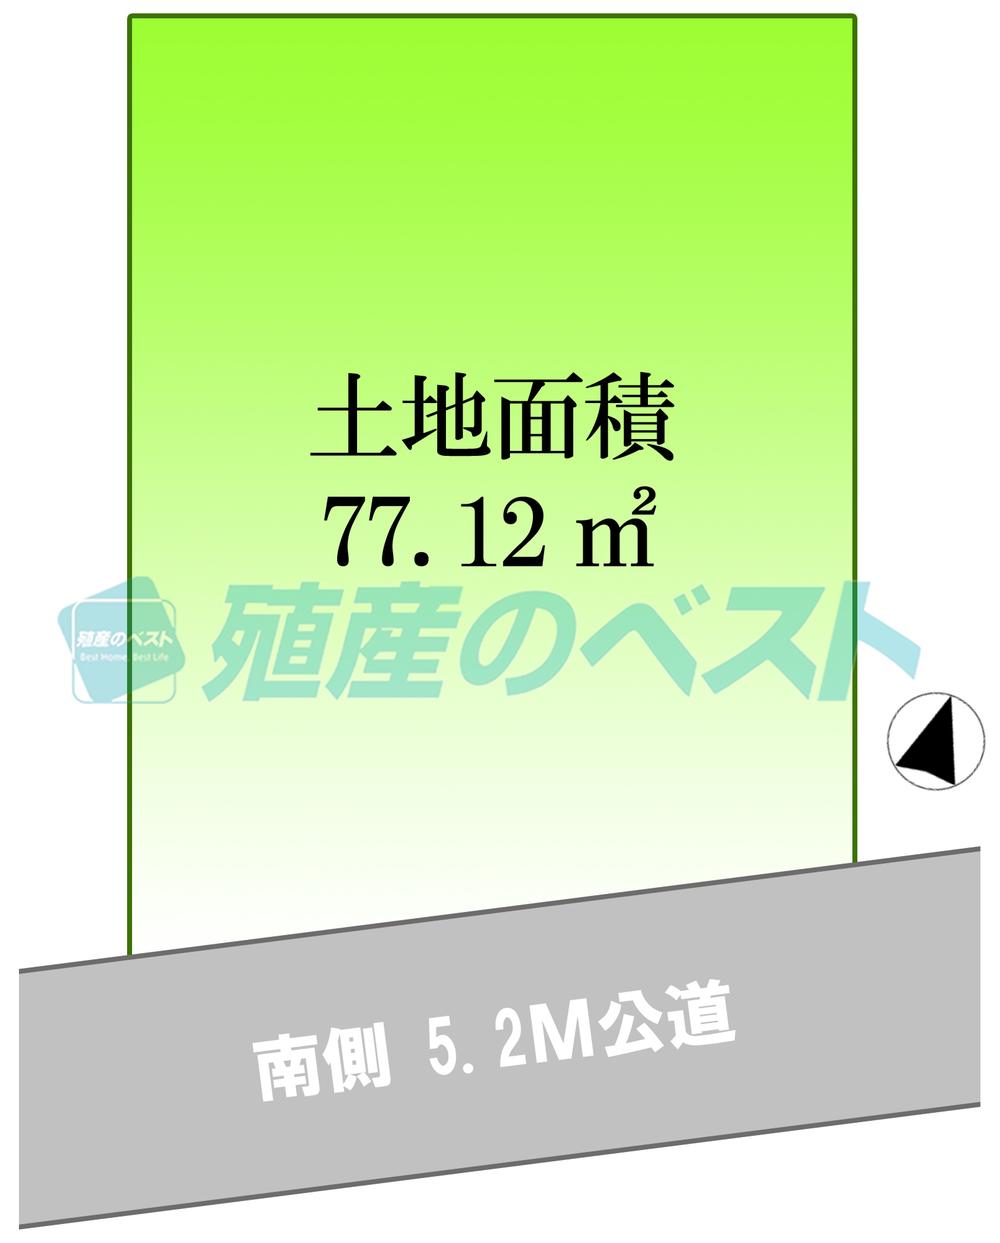 Compartment figure. 49,800,000 yen, 3LDK + S (storeroom), Land area 77.12 sq m , Building area 76.92 sq m